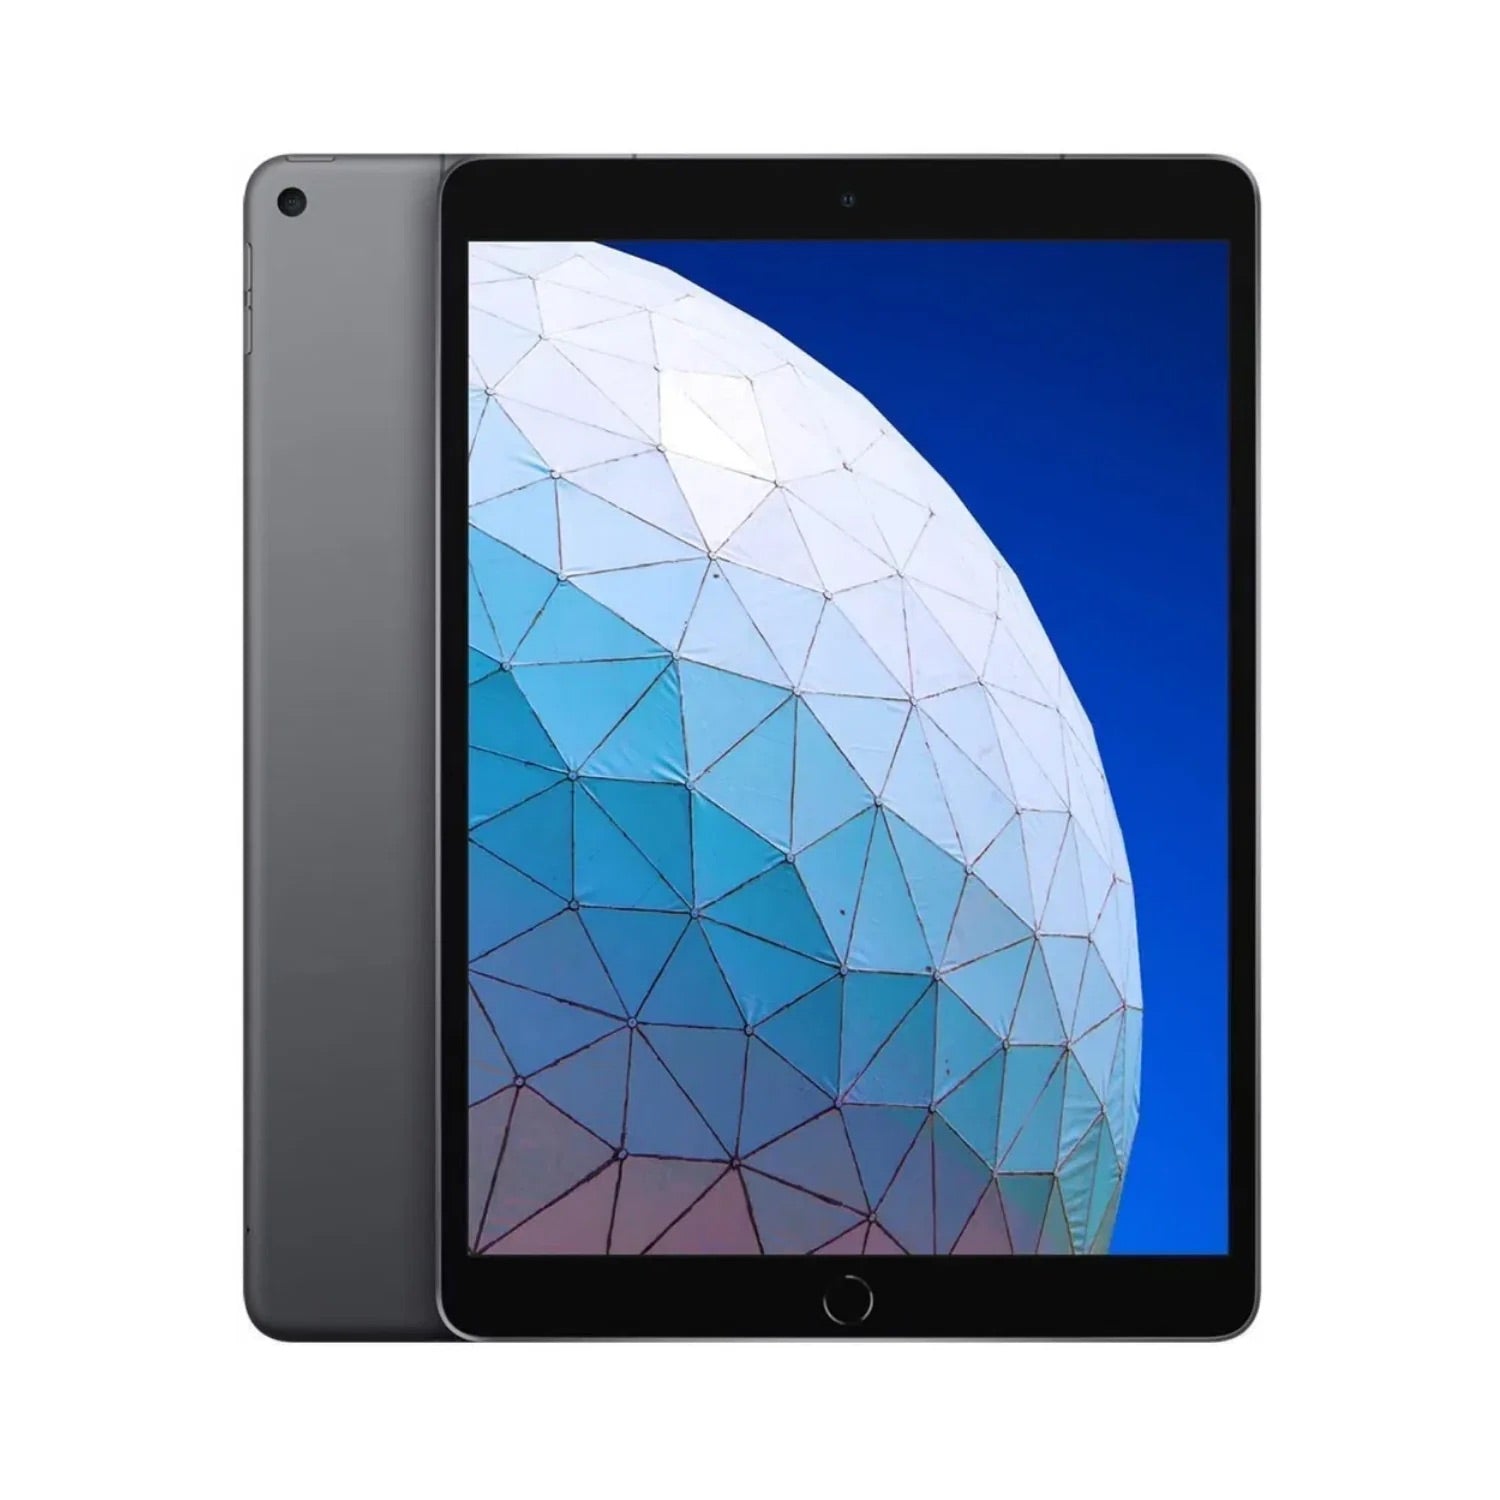 Pack Tablet: iPad Air (3 unidades)